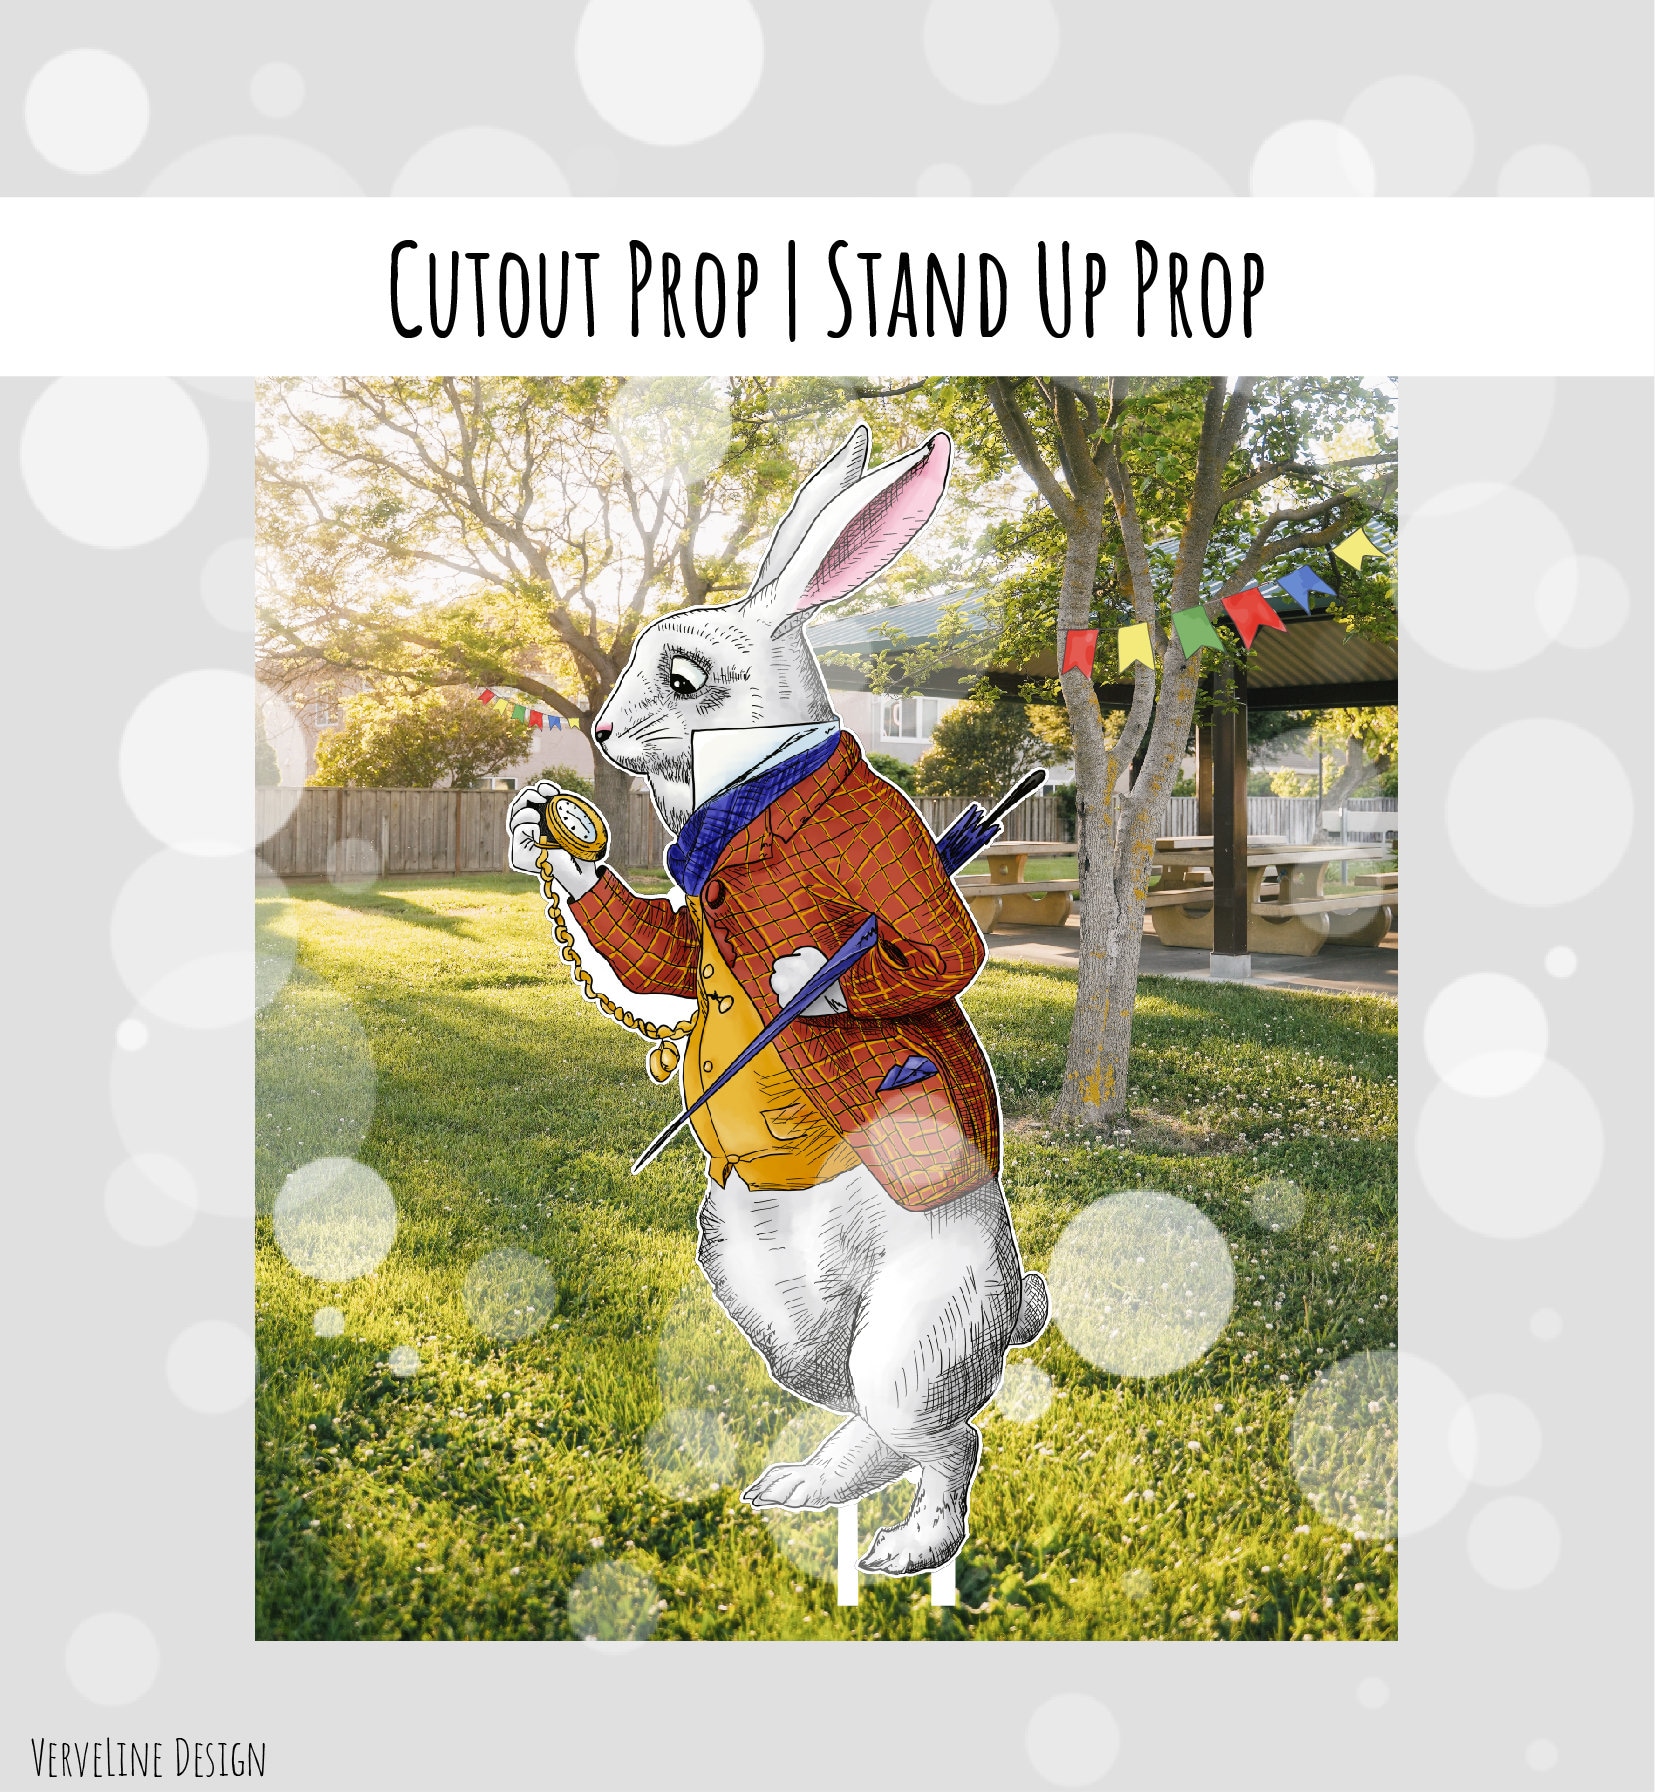 Cute Bunny Boots Shoes - Wonderland Case